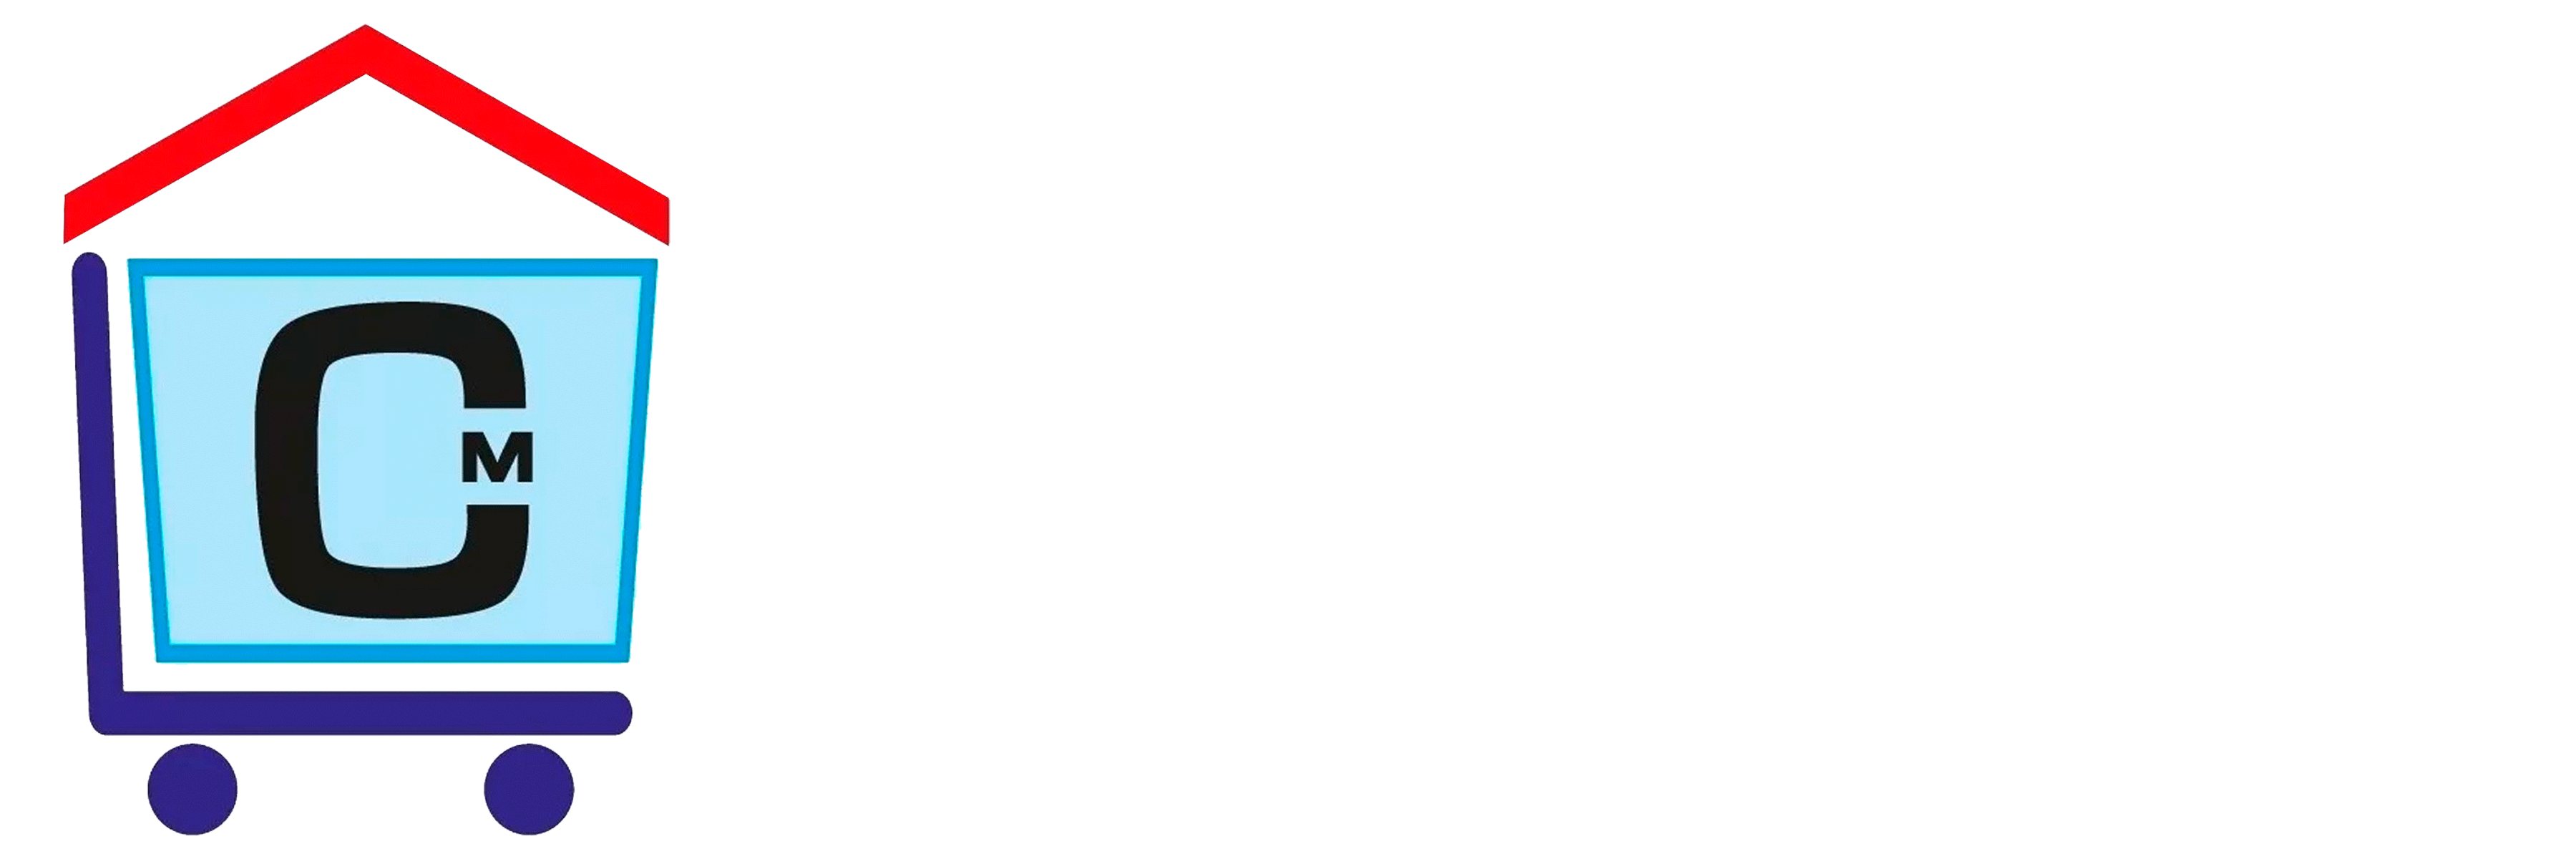 Centro de Materiales